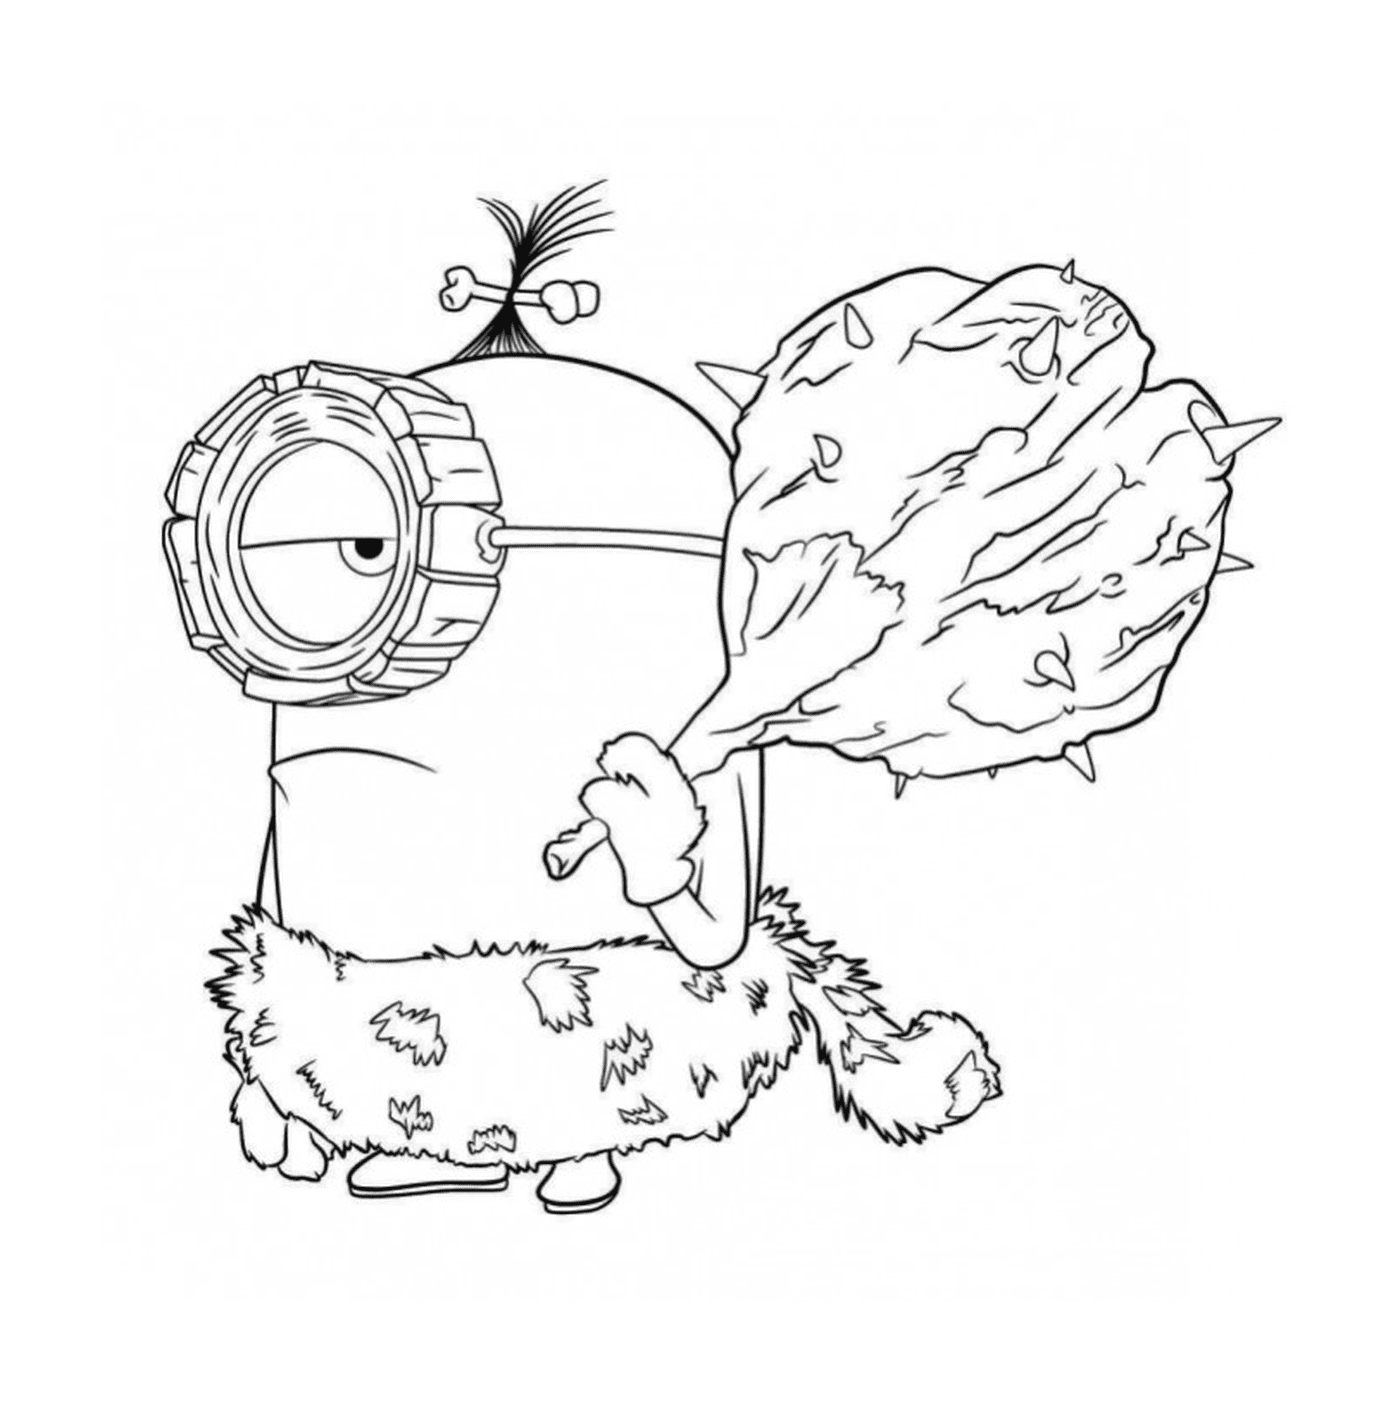  Minion prehistórico 2, personaje animado 